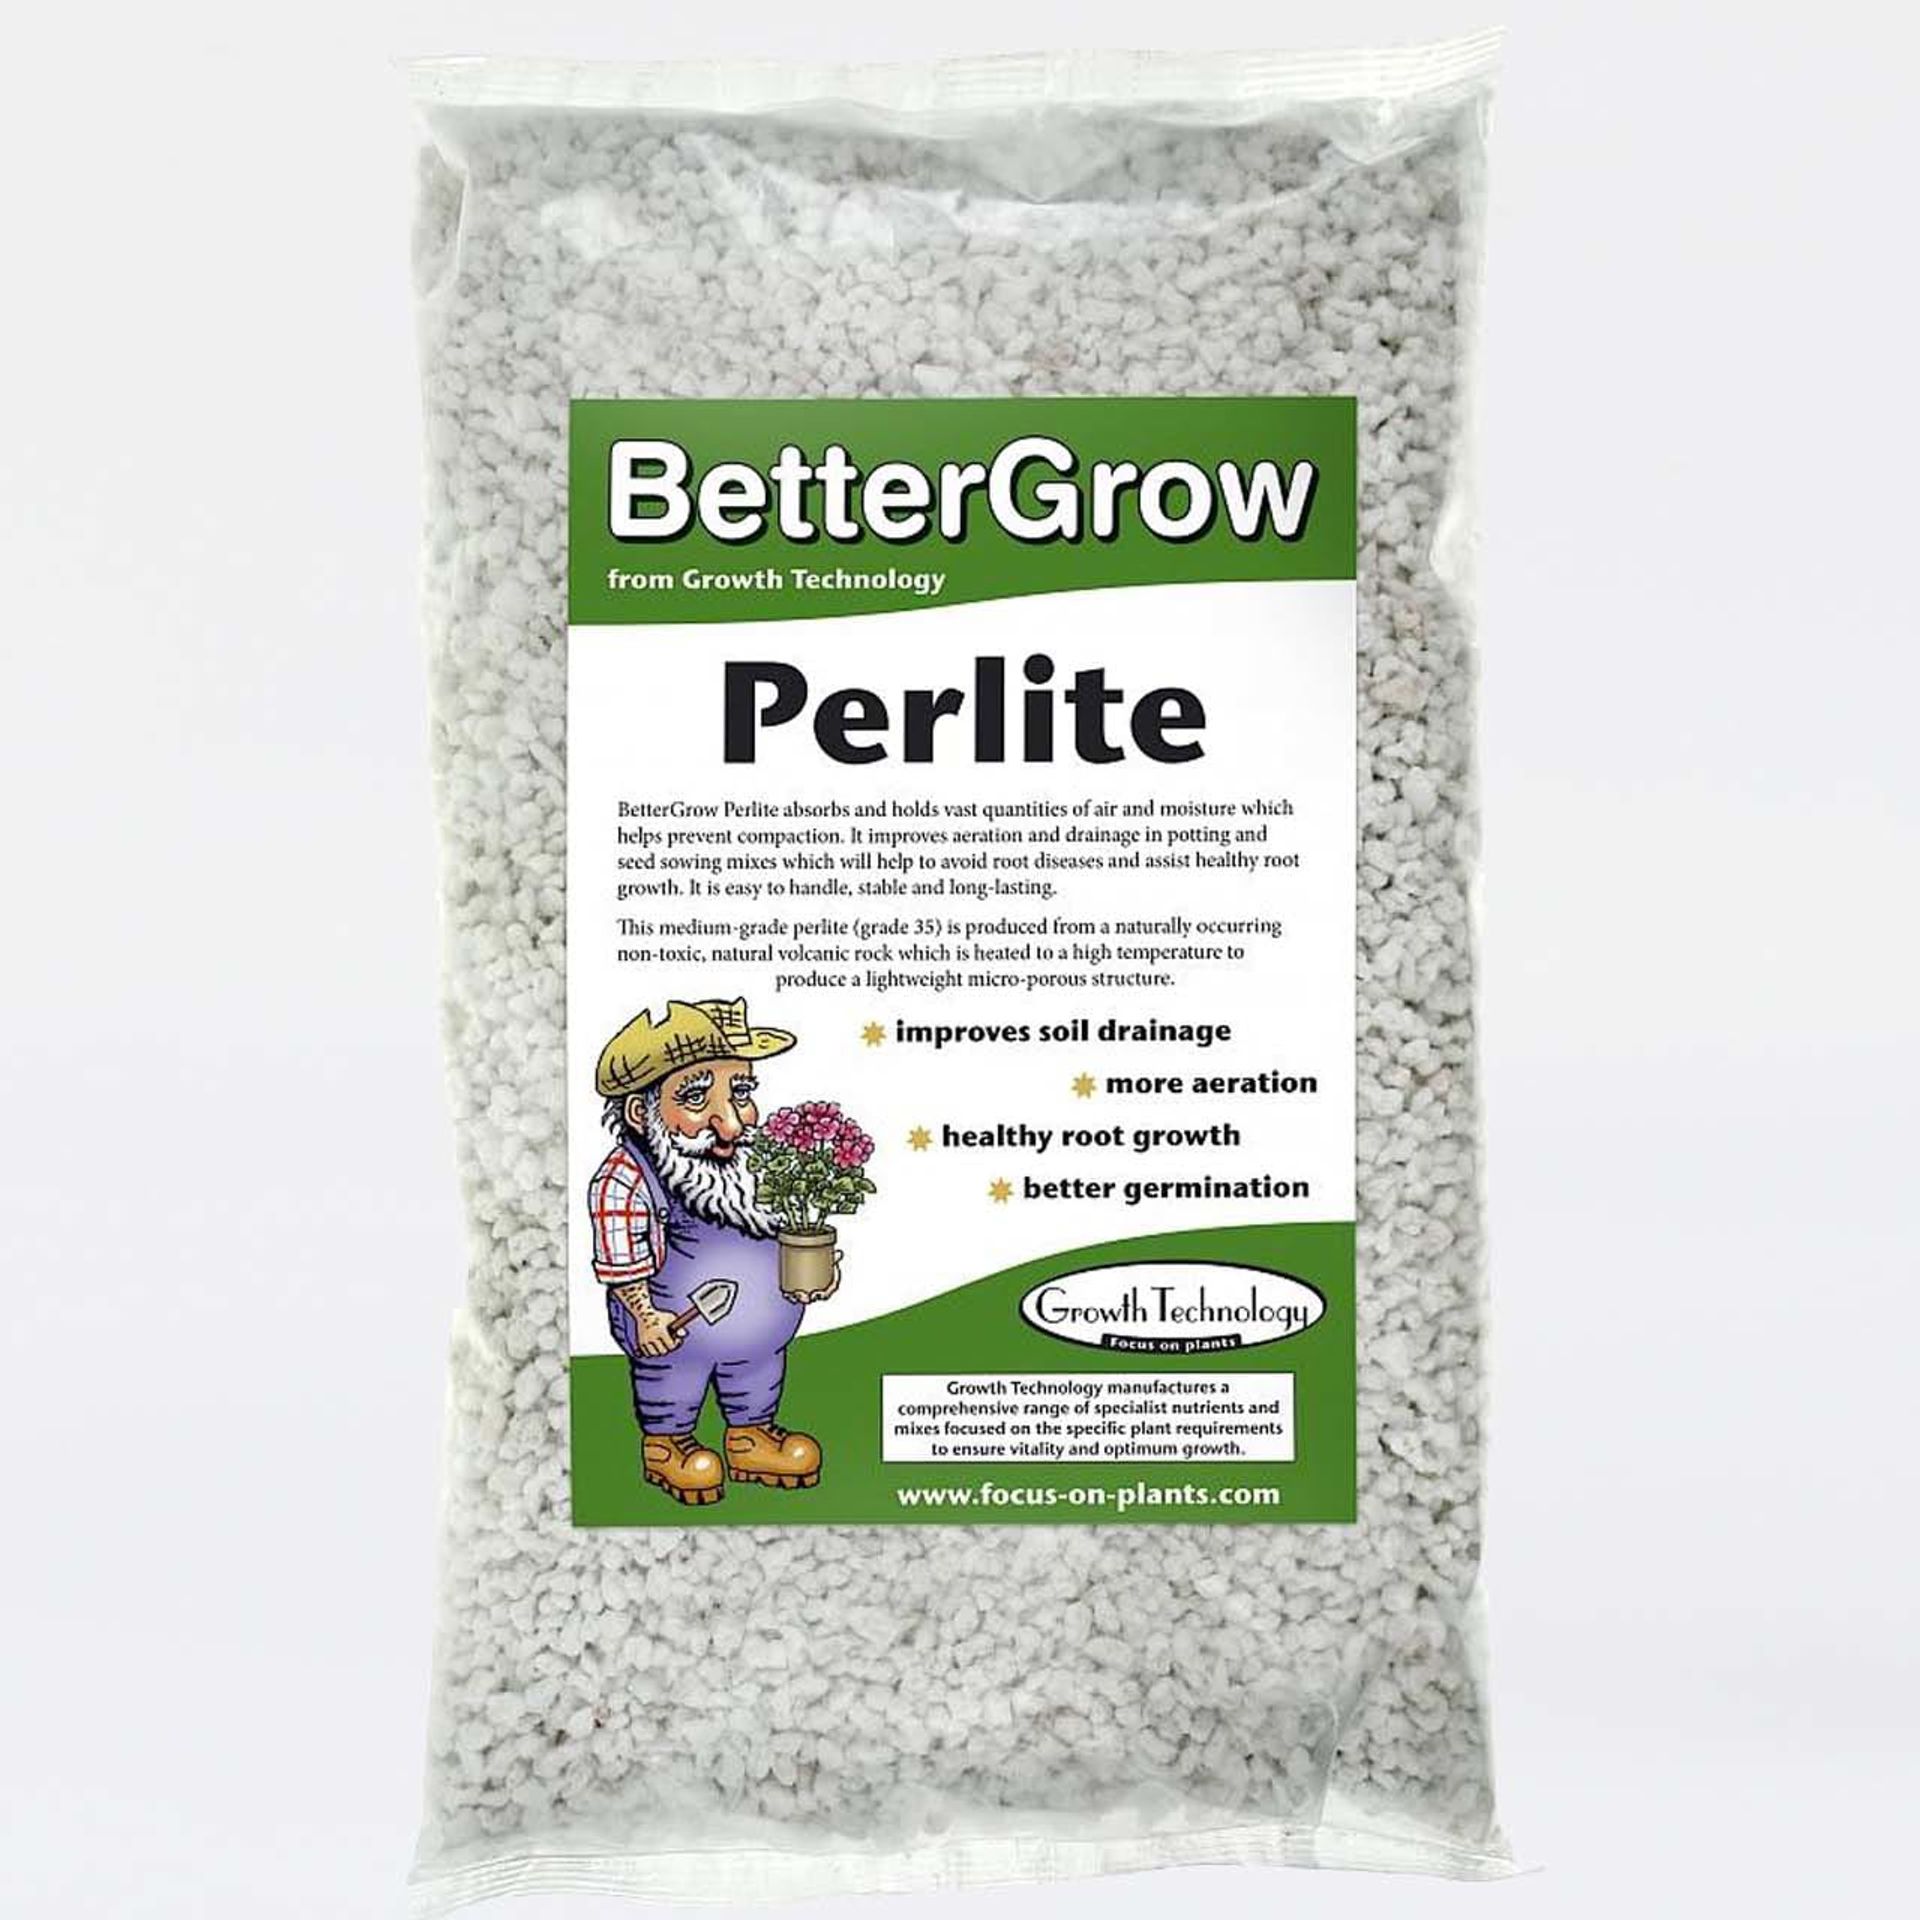 Bettergrow Perlite